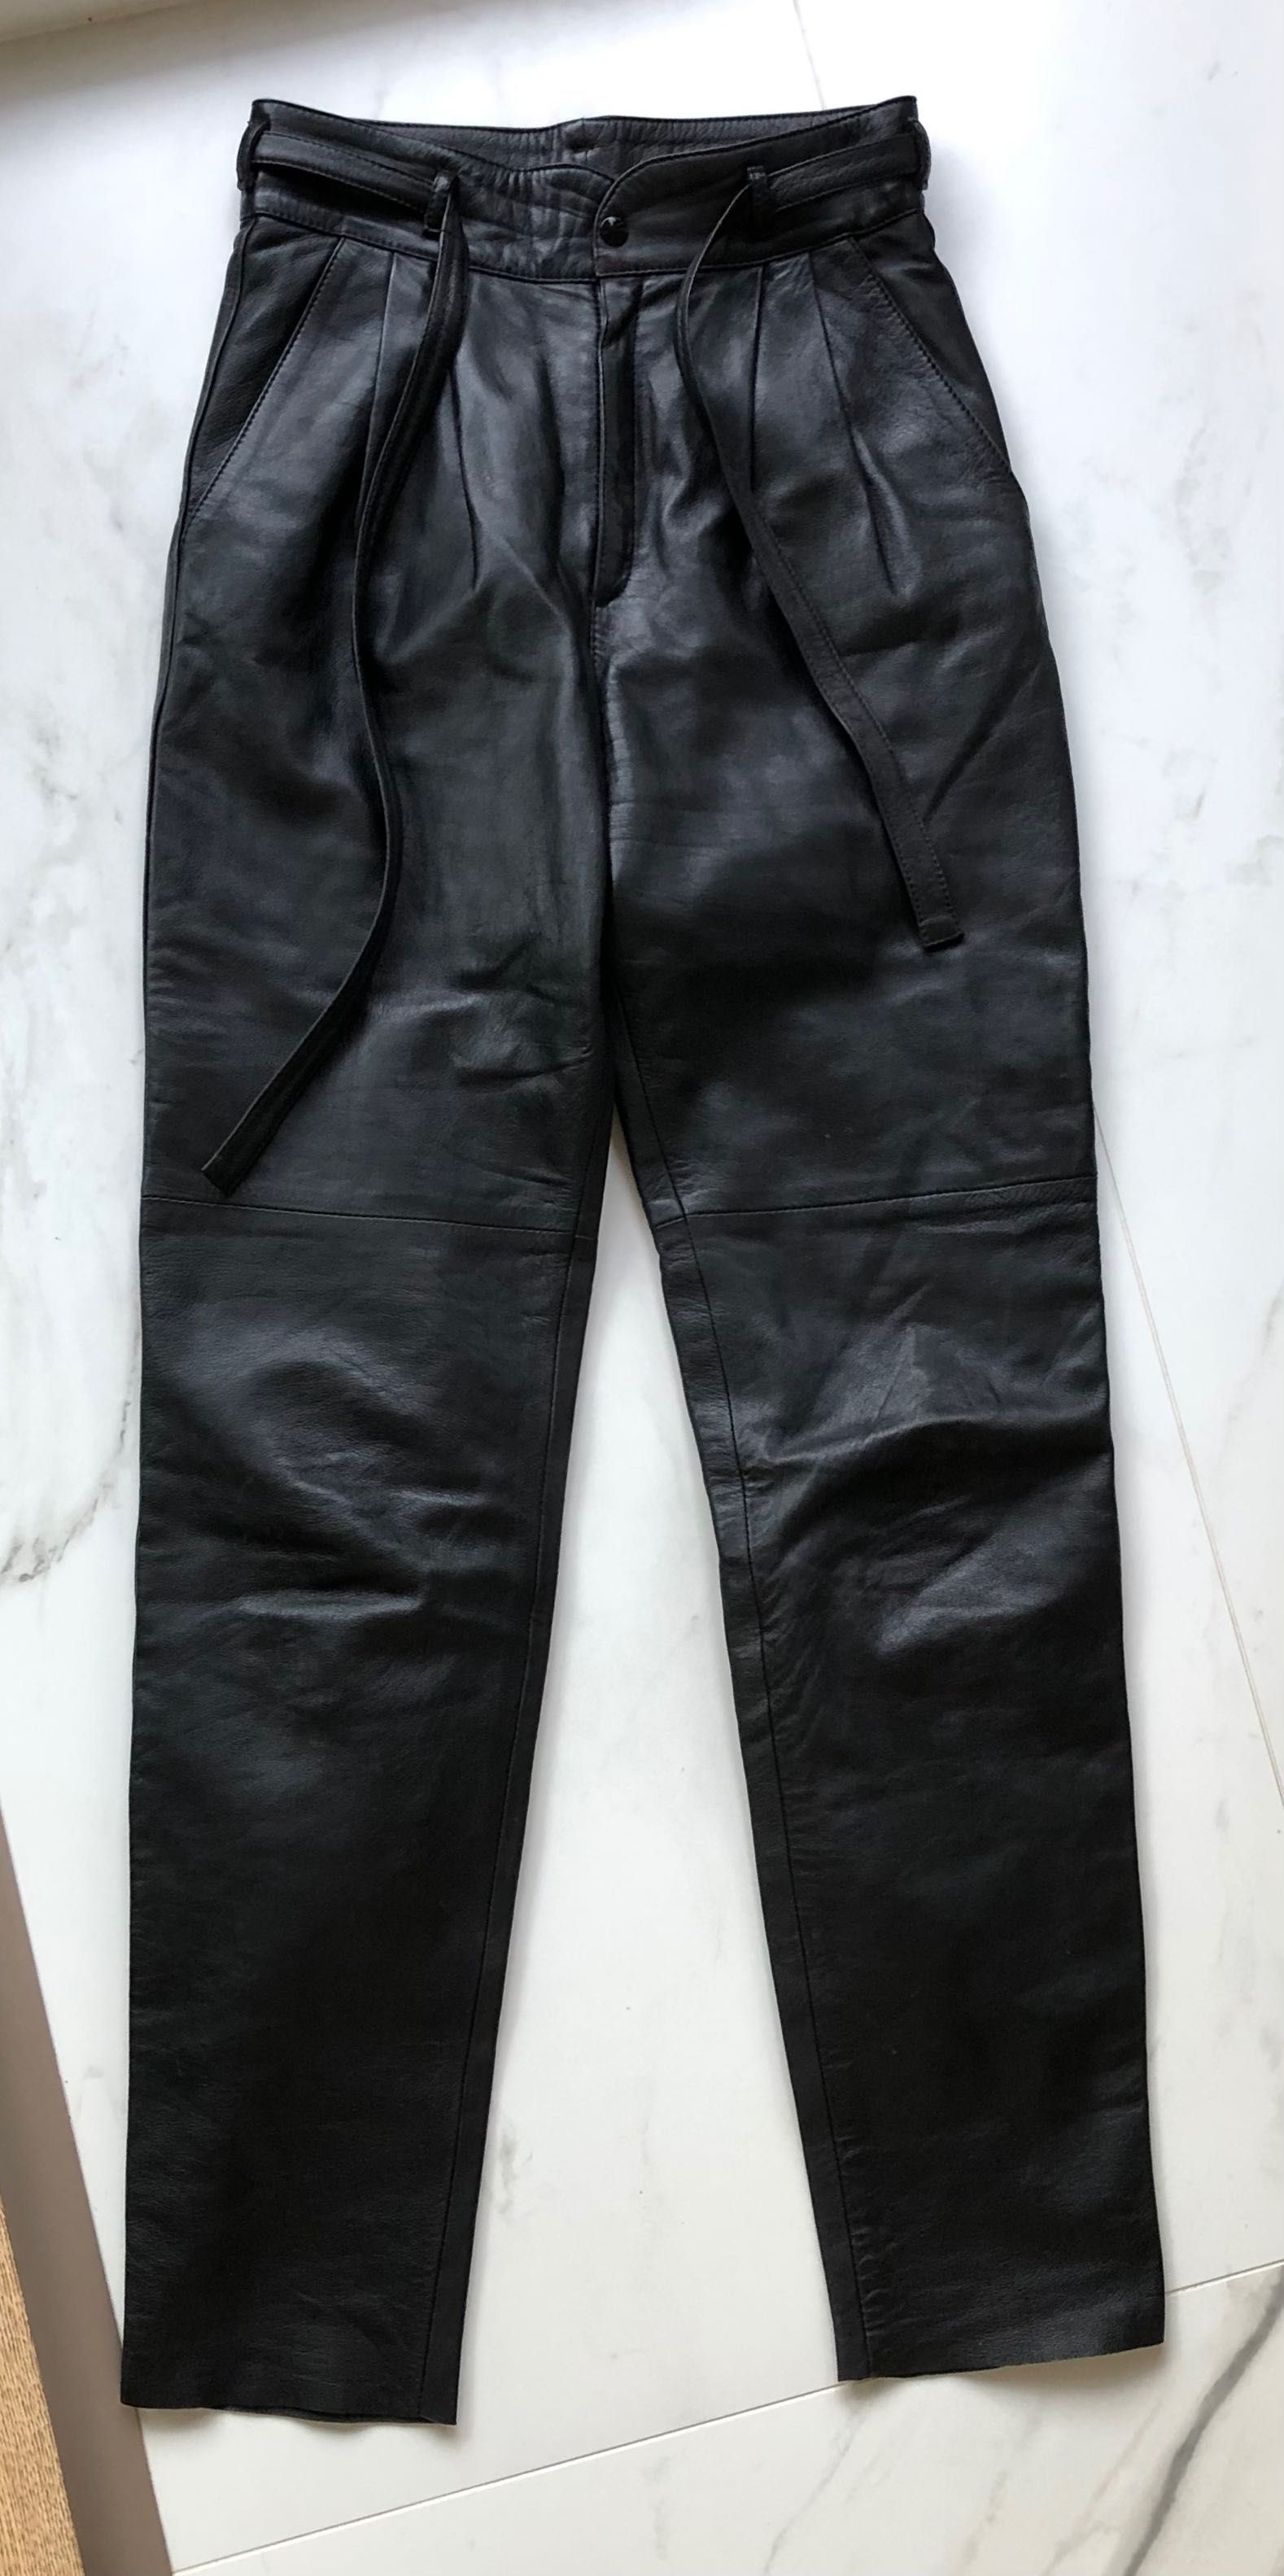 Spodnie skorzane skora naturalna vintage retro chinosy wysoki stan